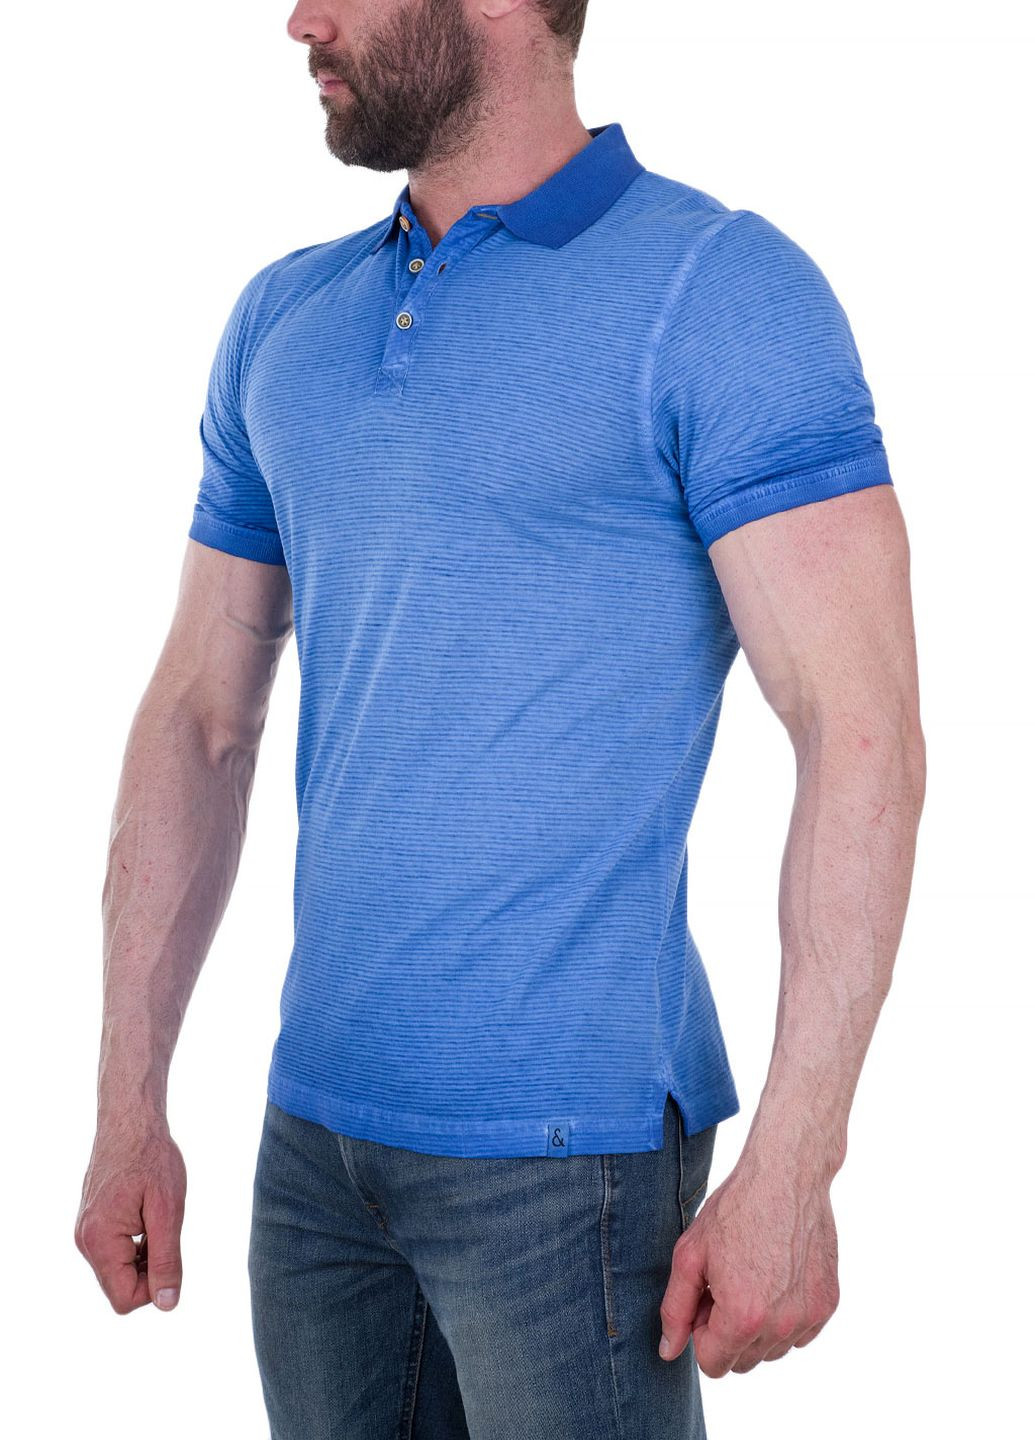 Синяя футболка-поло для мужчин COLOURS & SONS однотонная